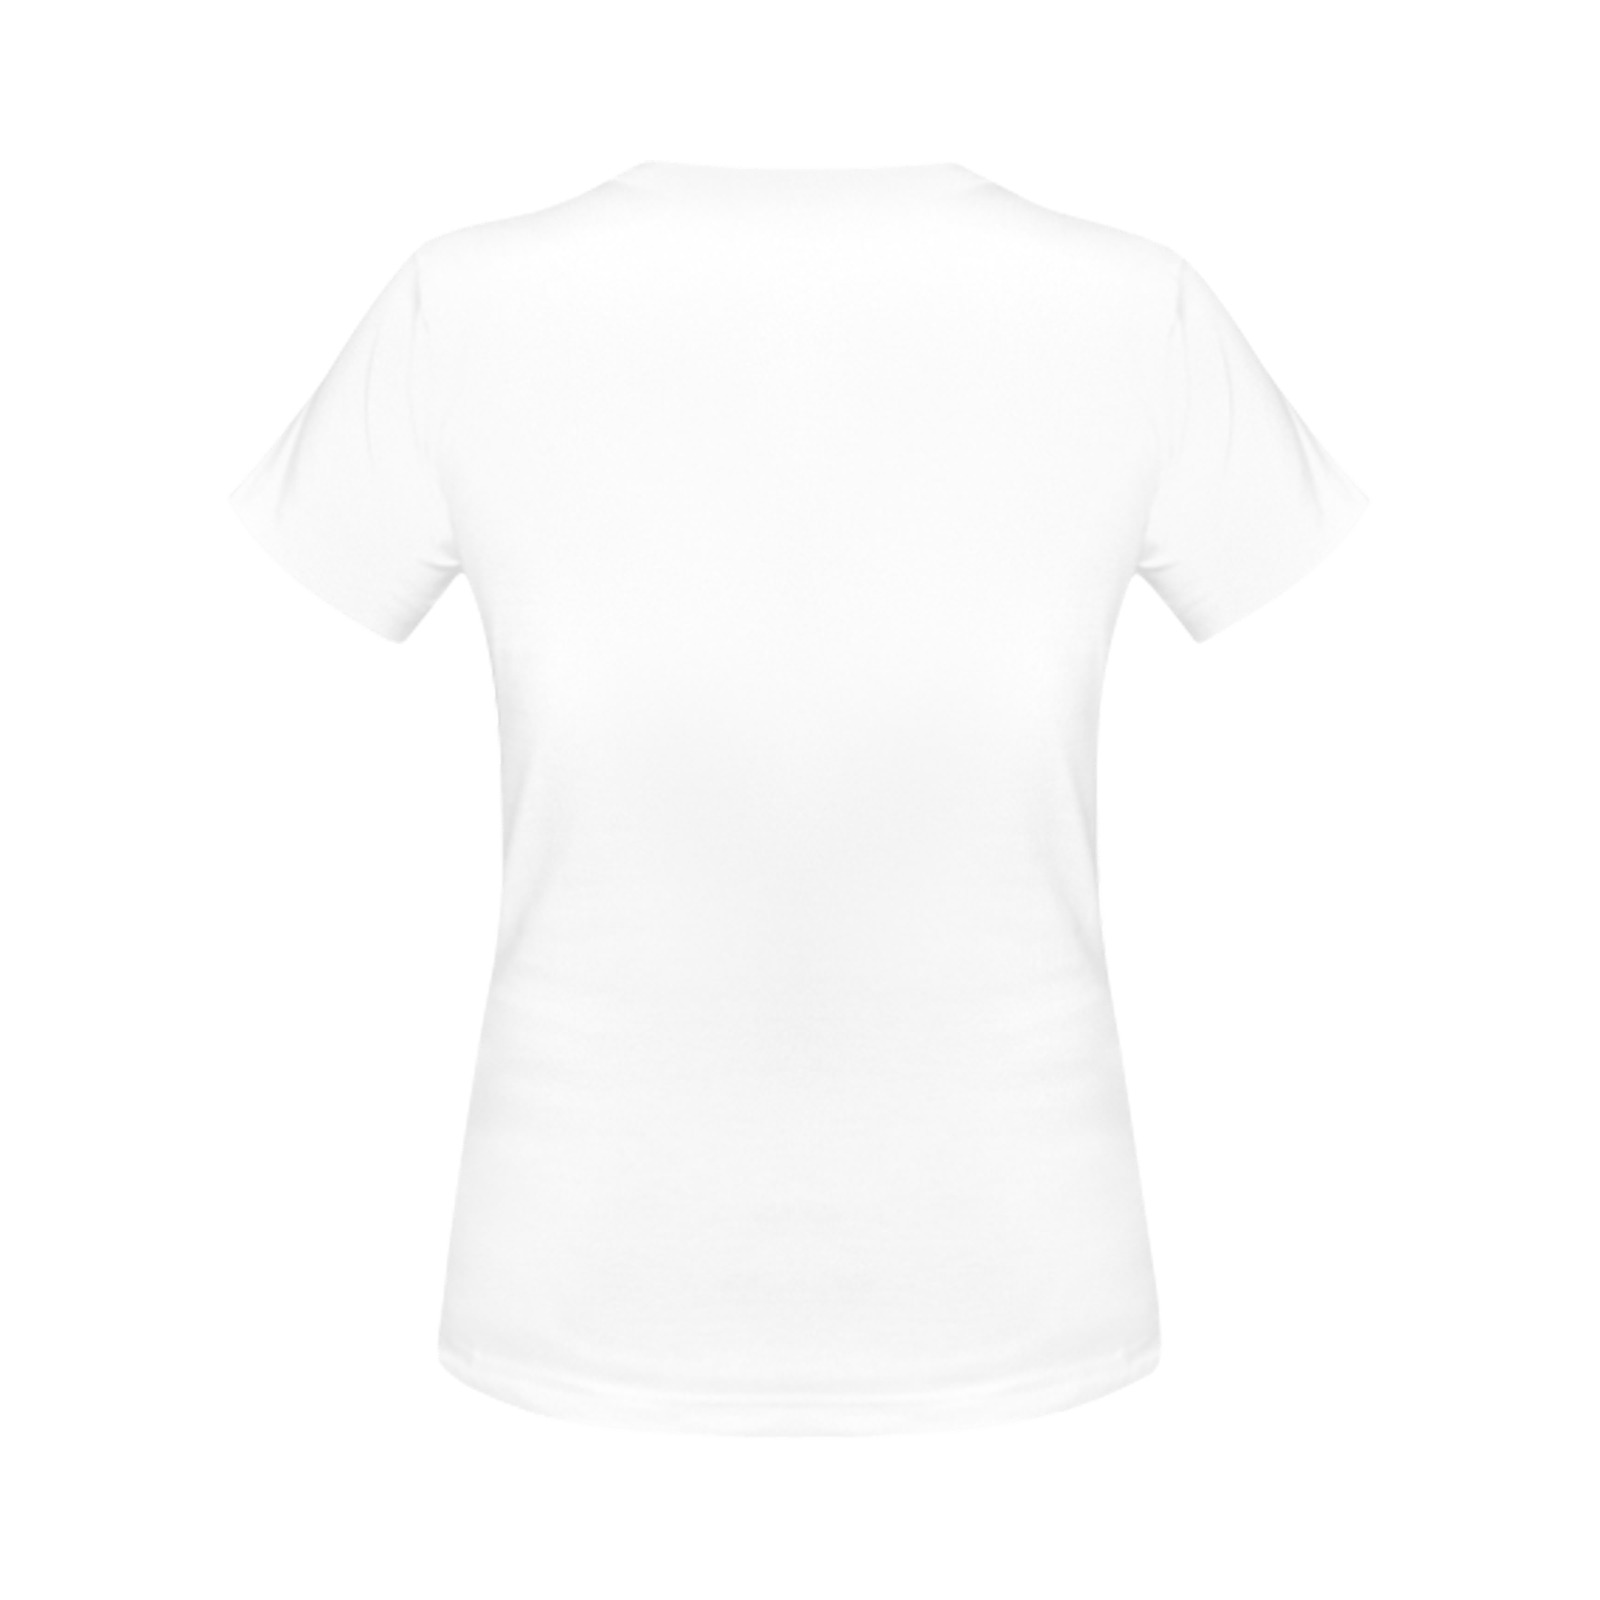 Ski Snowbird, Utah - Woman Skier, Black Text Women's T-Shirt in USA Size (Front Printing Only)